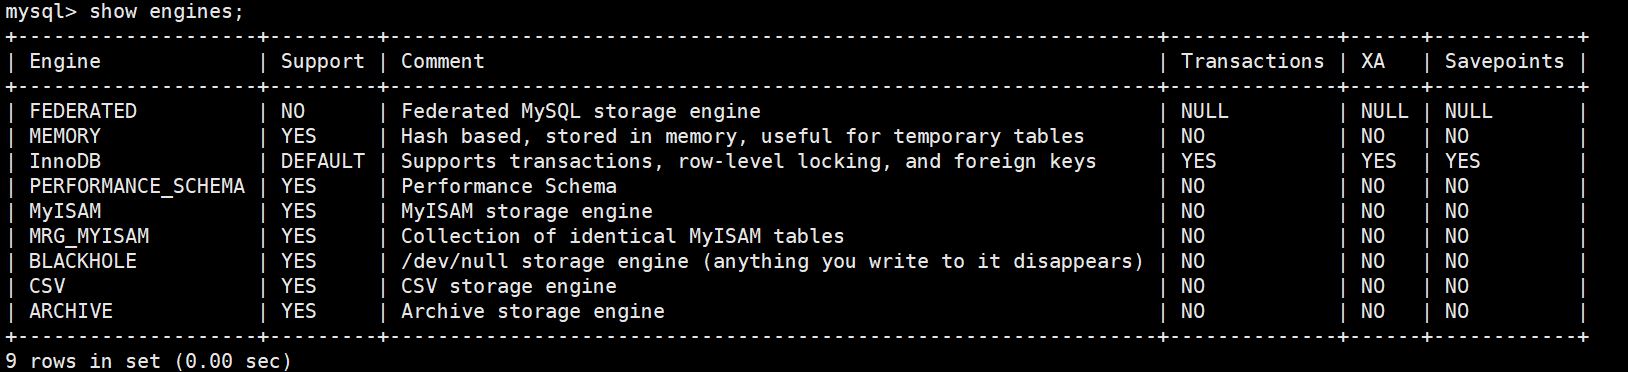 MySQL-05.存储引擎-小白菜博客